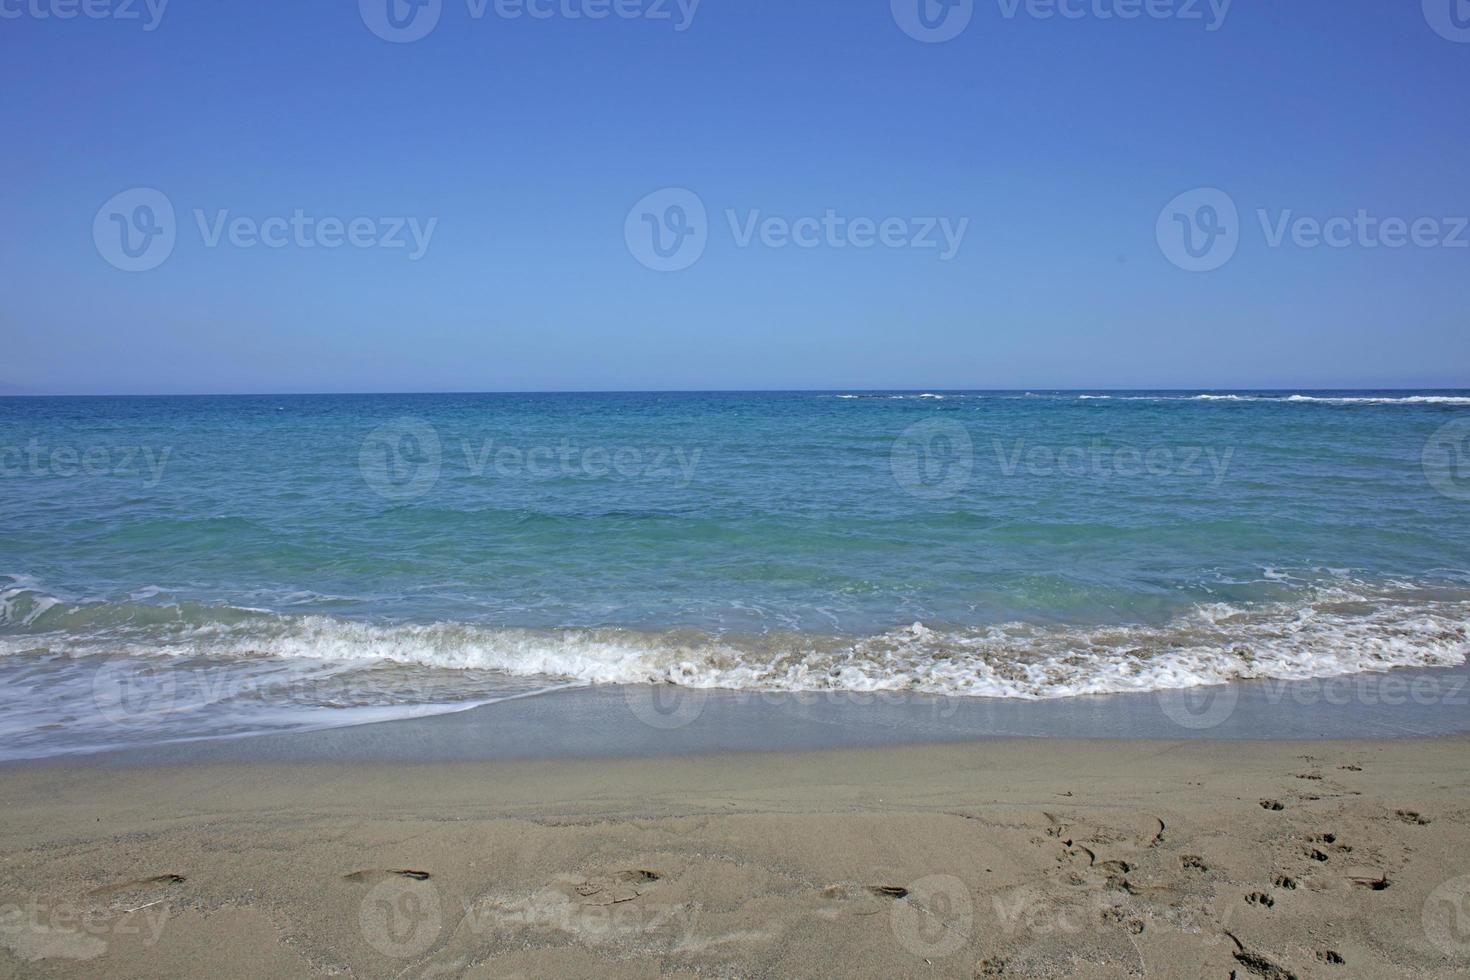 Frangokastello beach creta island covid-19 season background prints photo